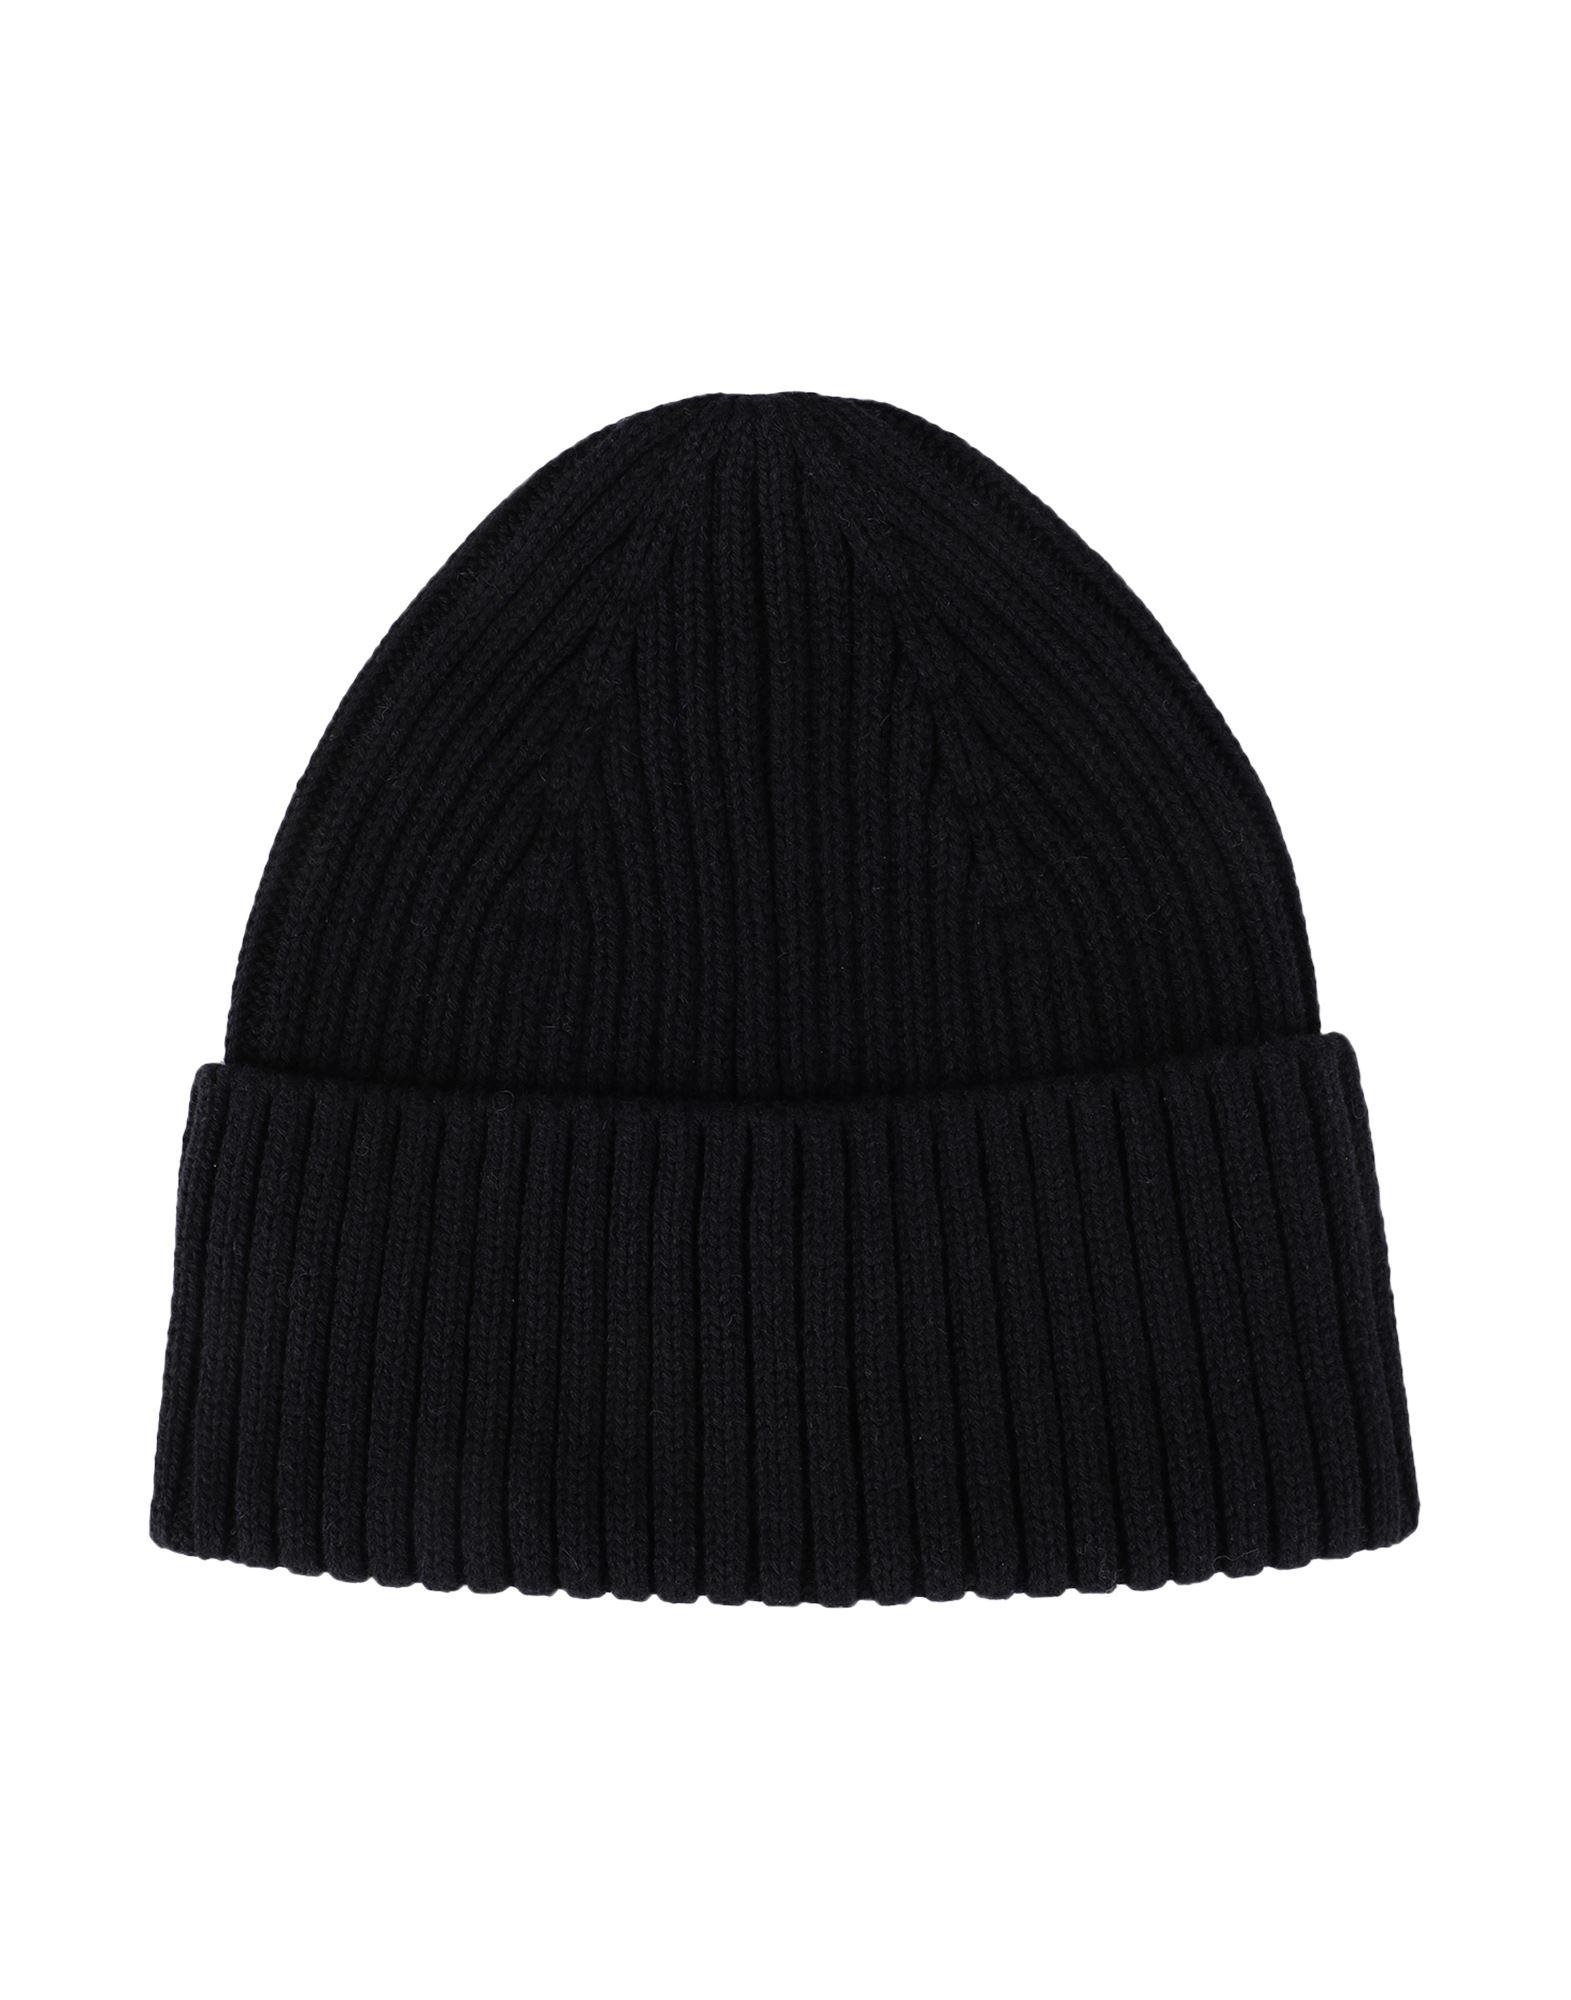 ARKET Hat in Black | Lyst Australia